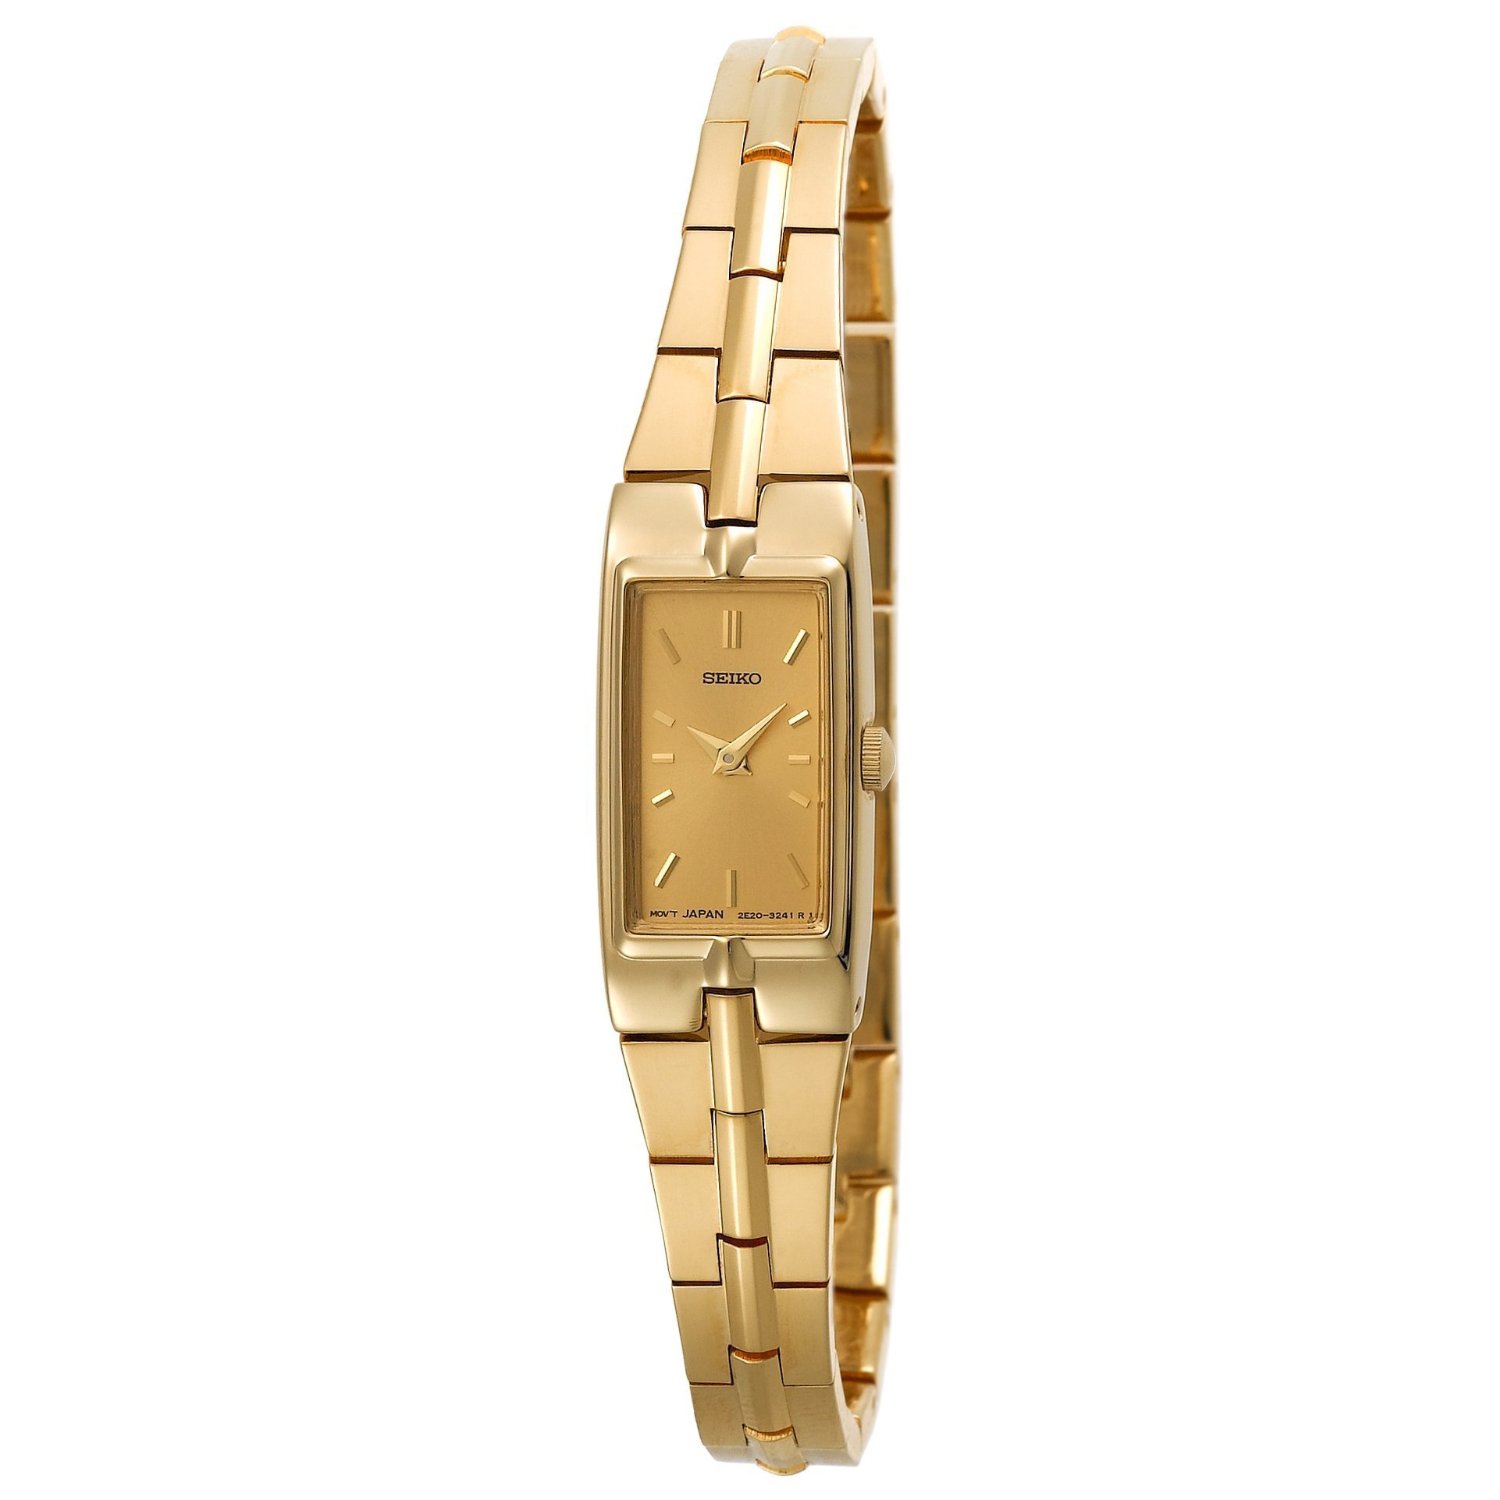 SZZC44 Seiko Women's Gold-Tone Dress Watch